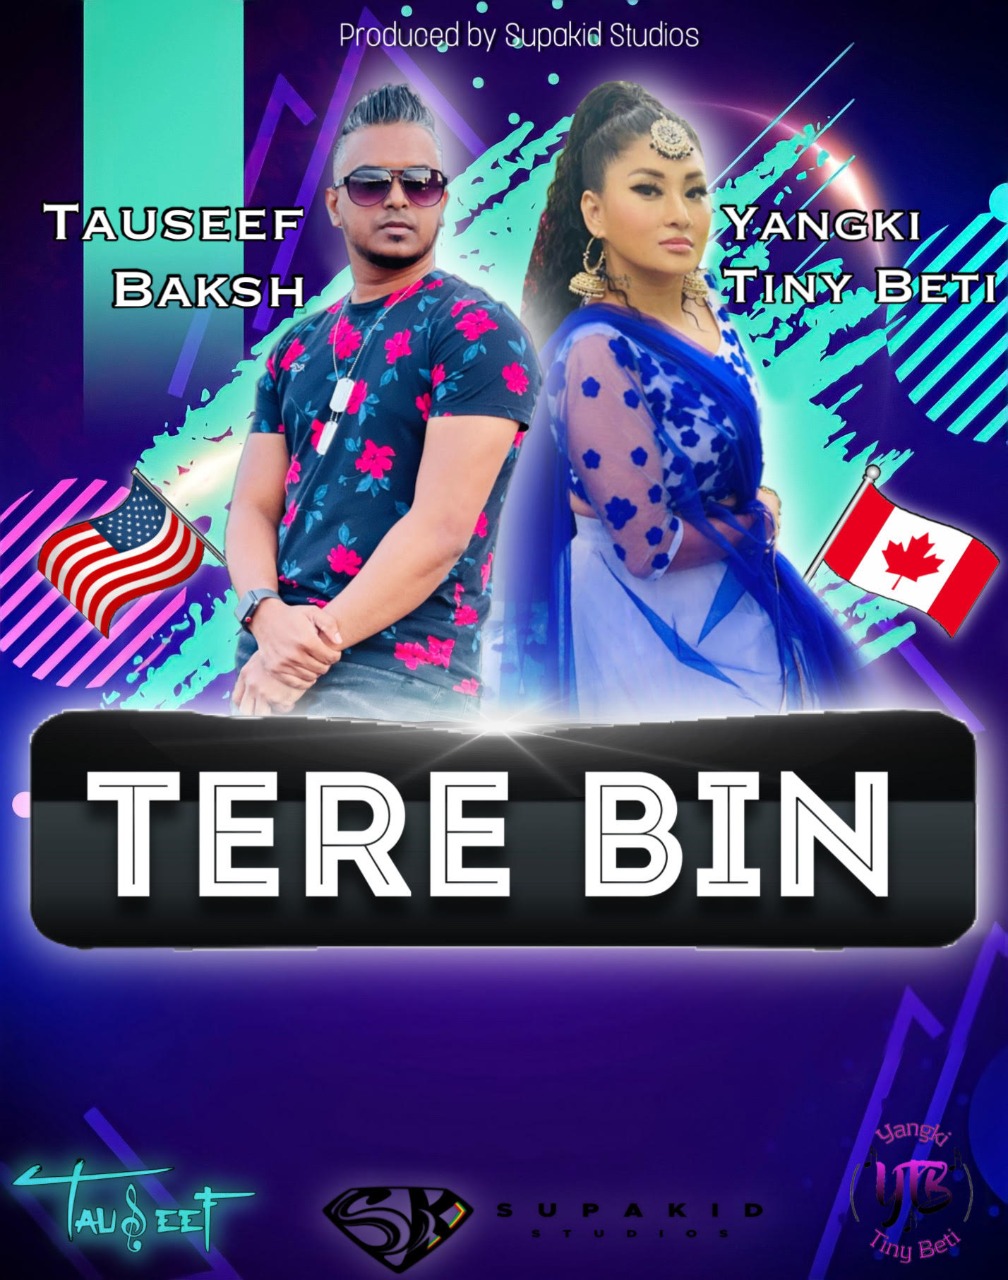 Tauseef Baksh & Yangki Tiny Beti - Tere Bin